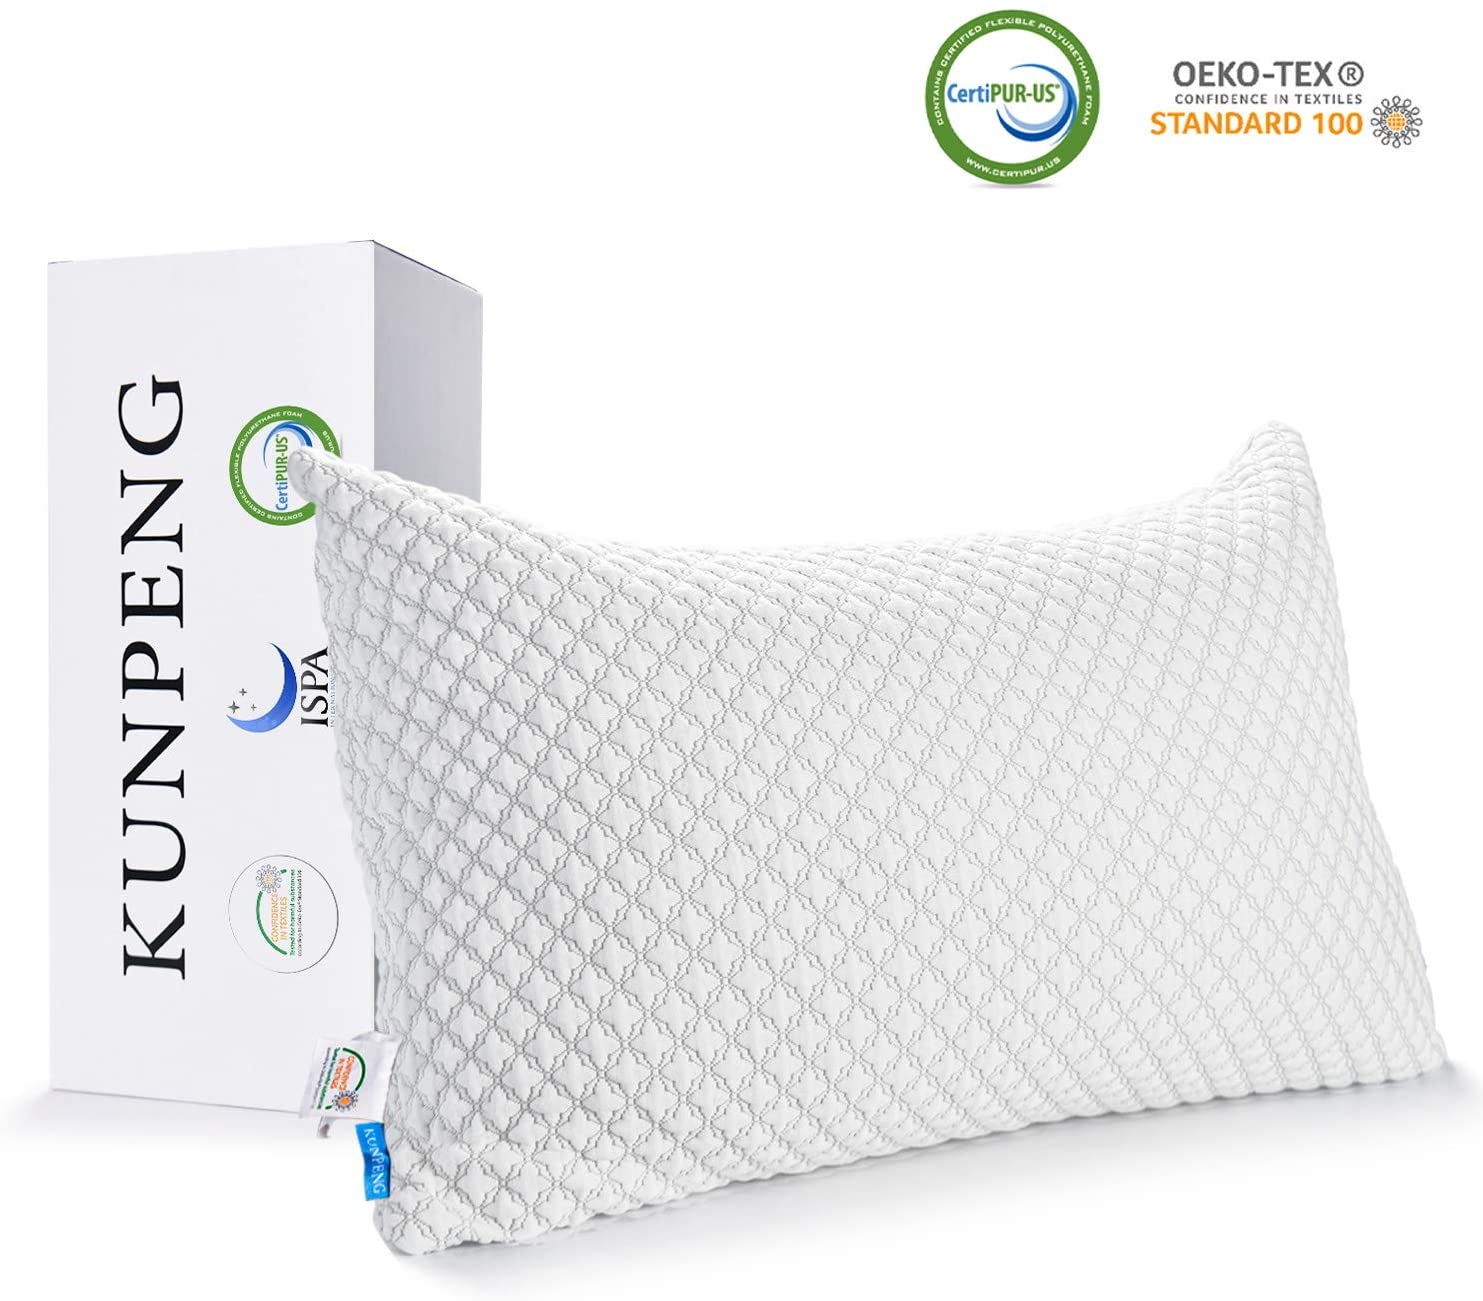 KUNPENG Cooling Hypoallergenic Memory Foam Pillow